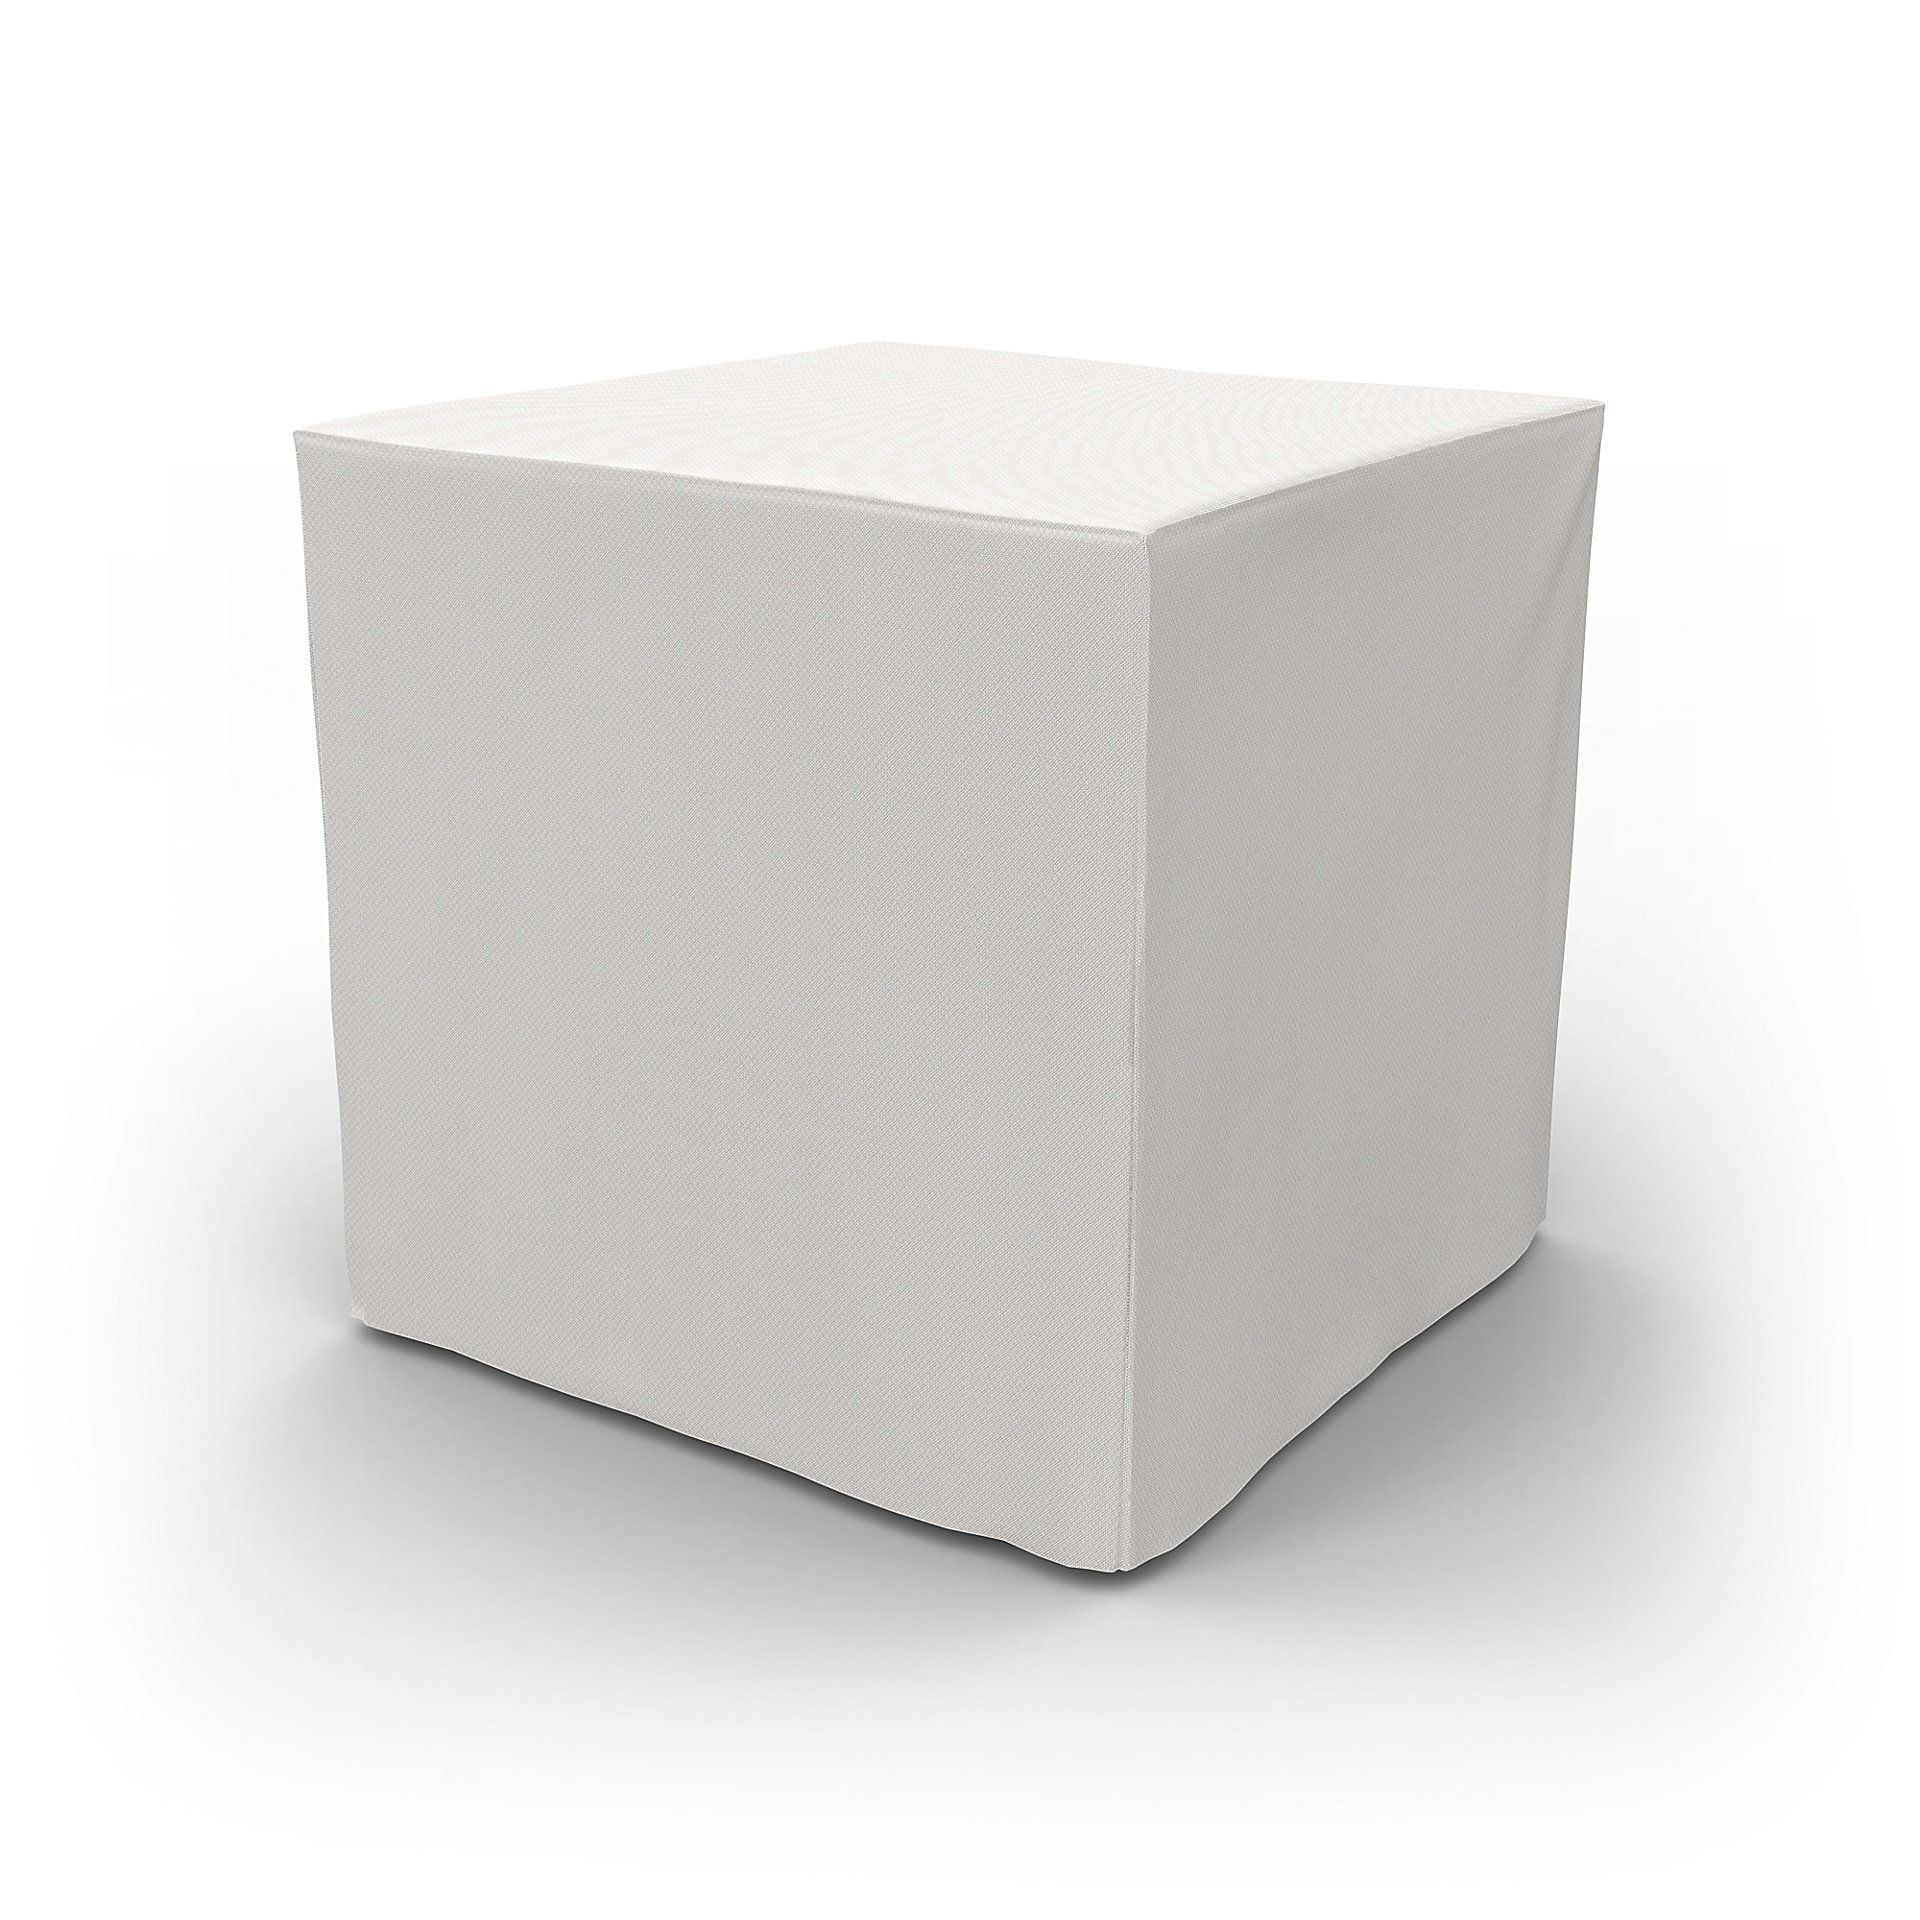 IKEA - Pallbo Footstool Cover, Soft White, Linen - Bemz